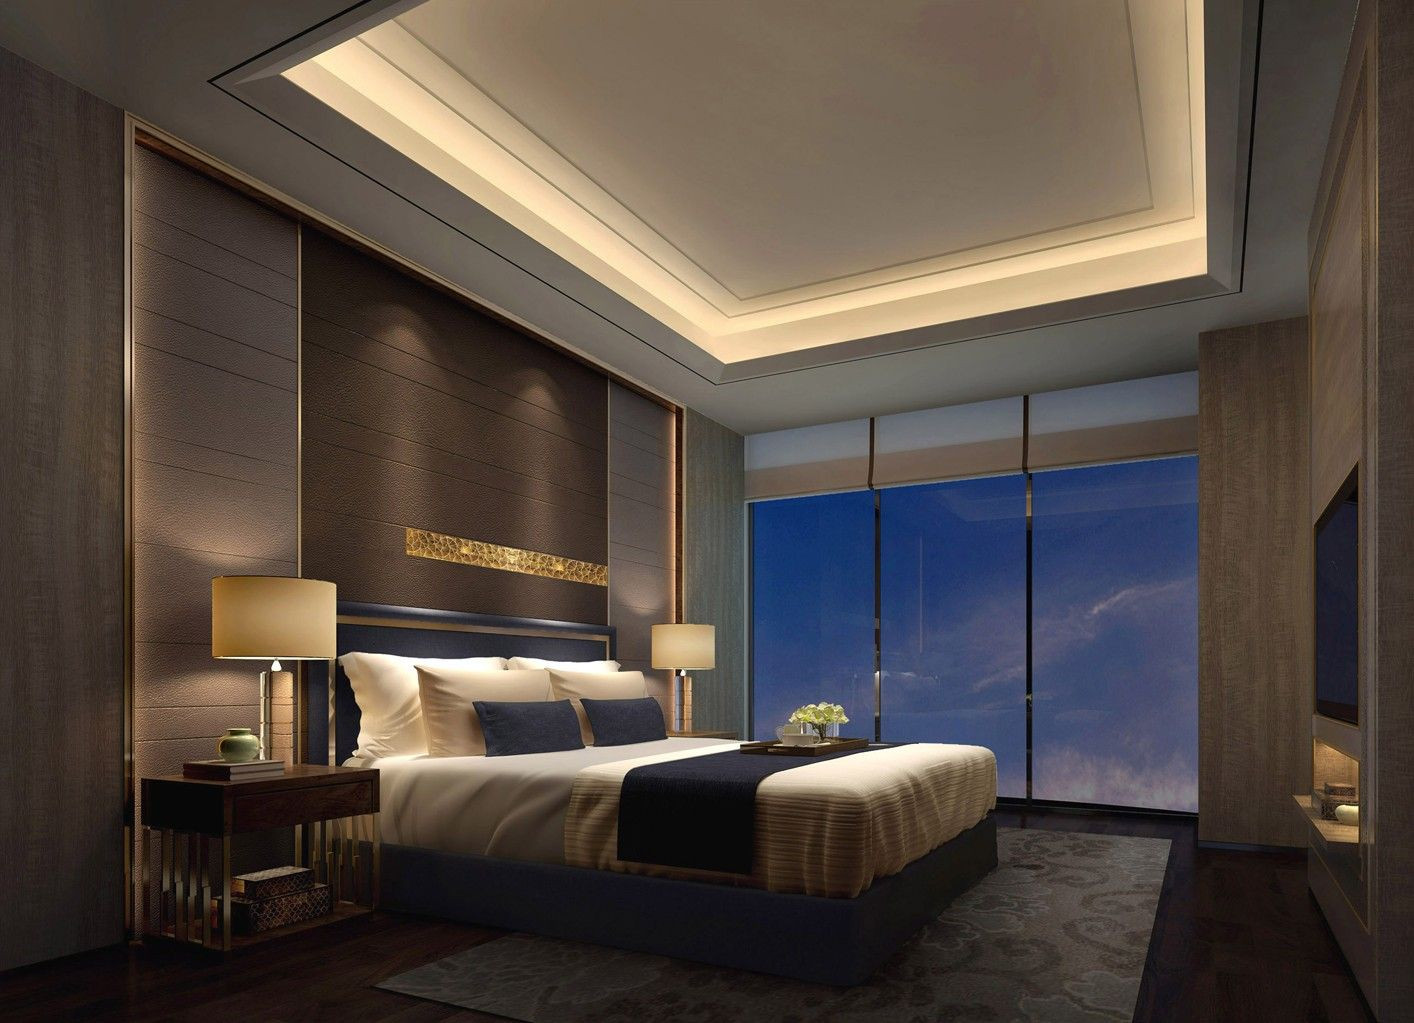 Master Bedroom Ceiling Light
 Recessed master bedroom ceiling with hidden lights